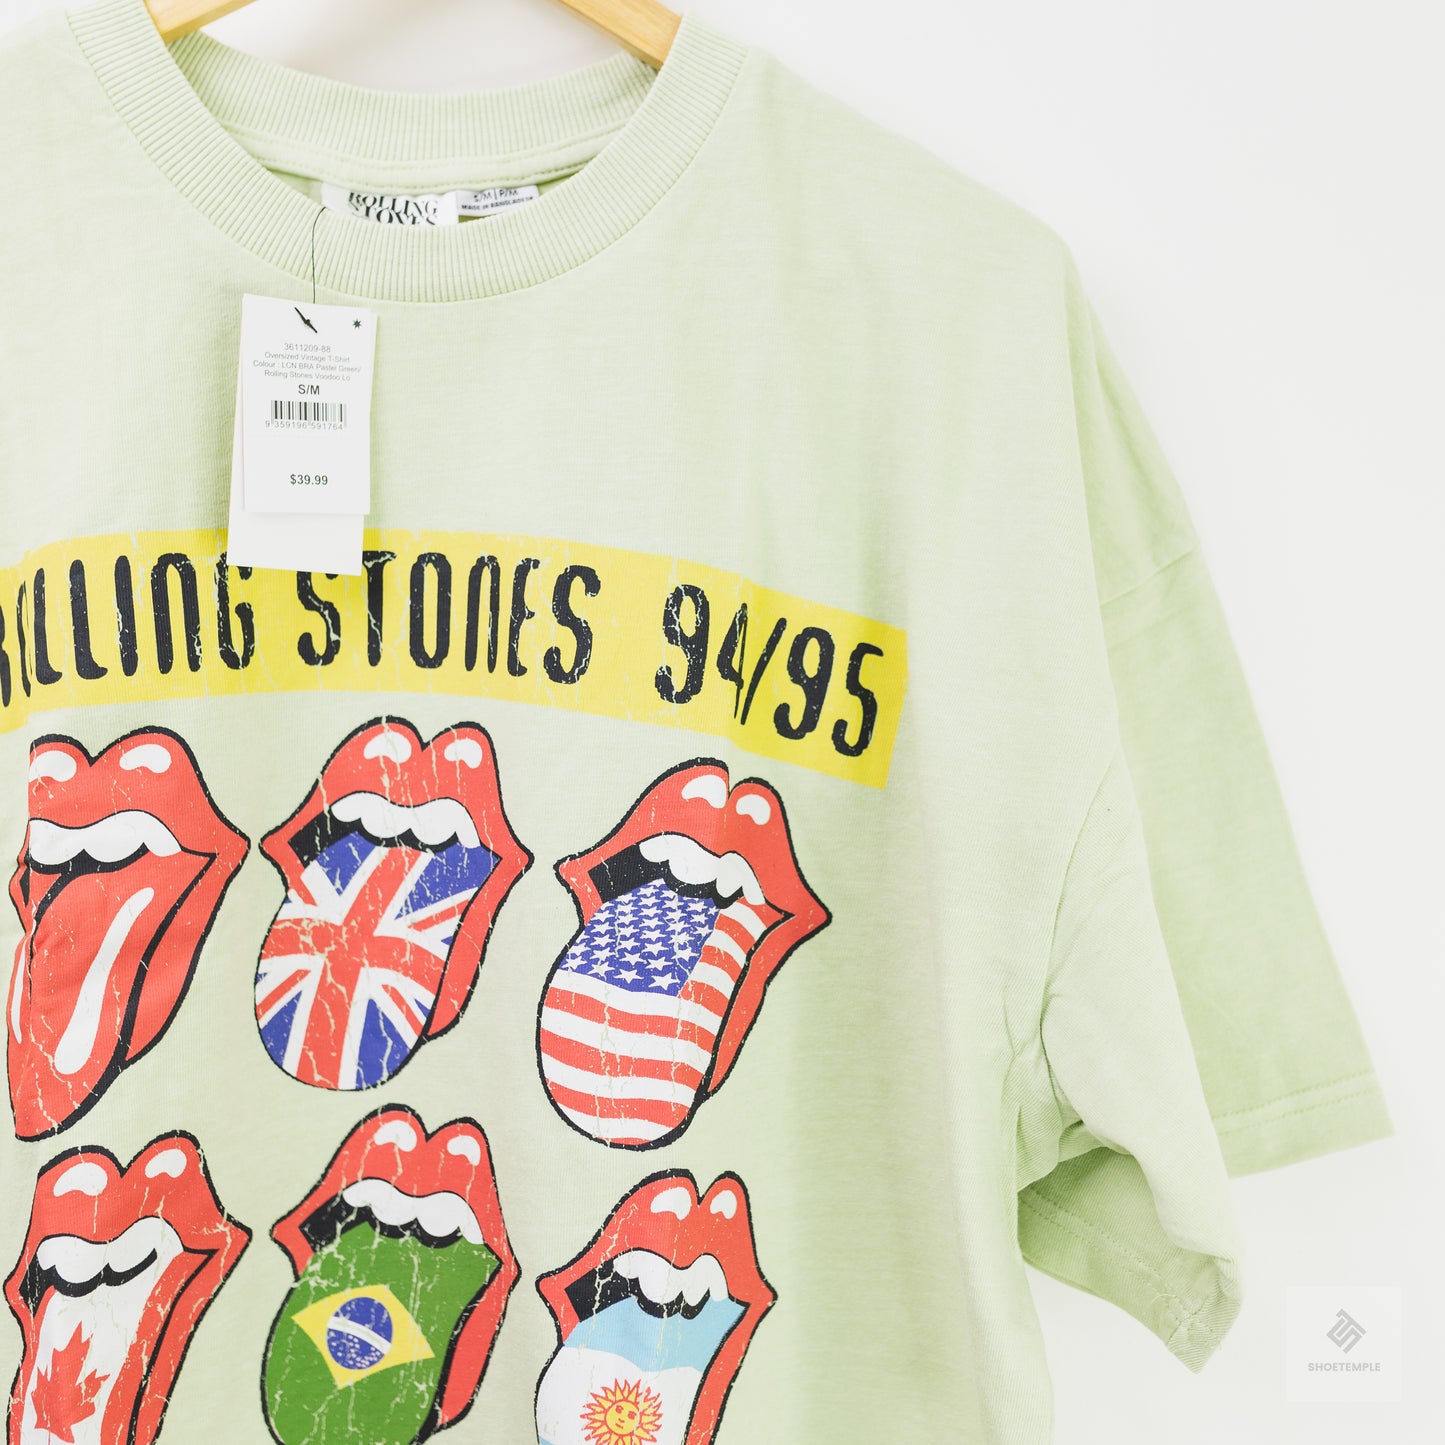 Rolling Stone Merch T-Shirt Oversized